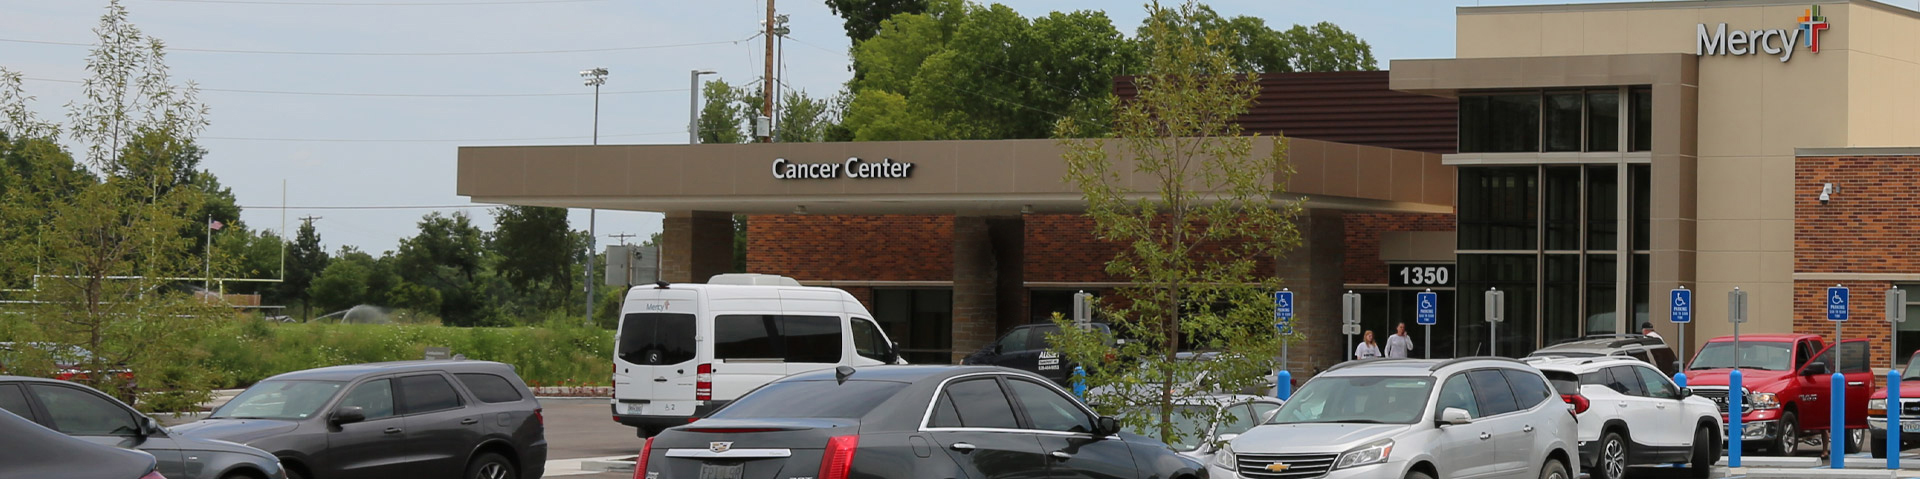 WEB_Hero_Location_Mercy-Cancer-Center-Jefferson